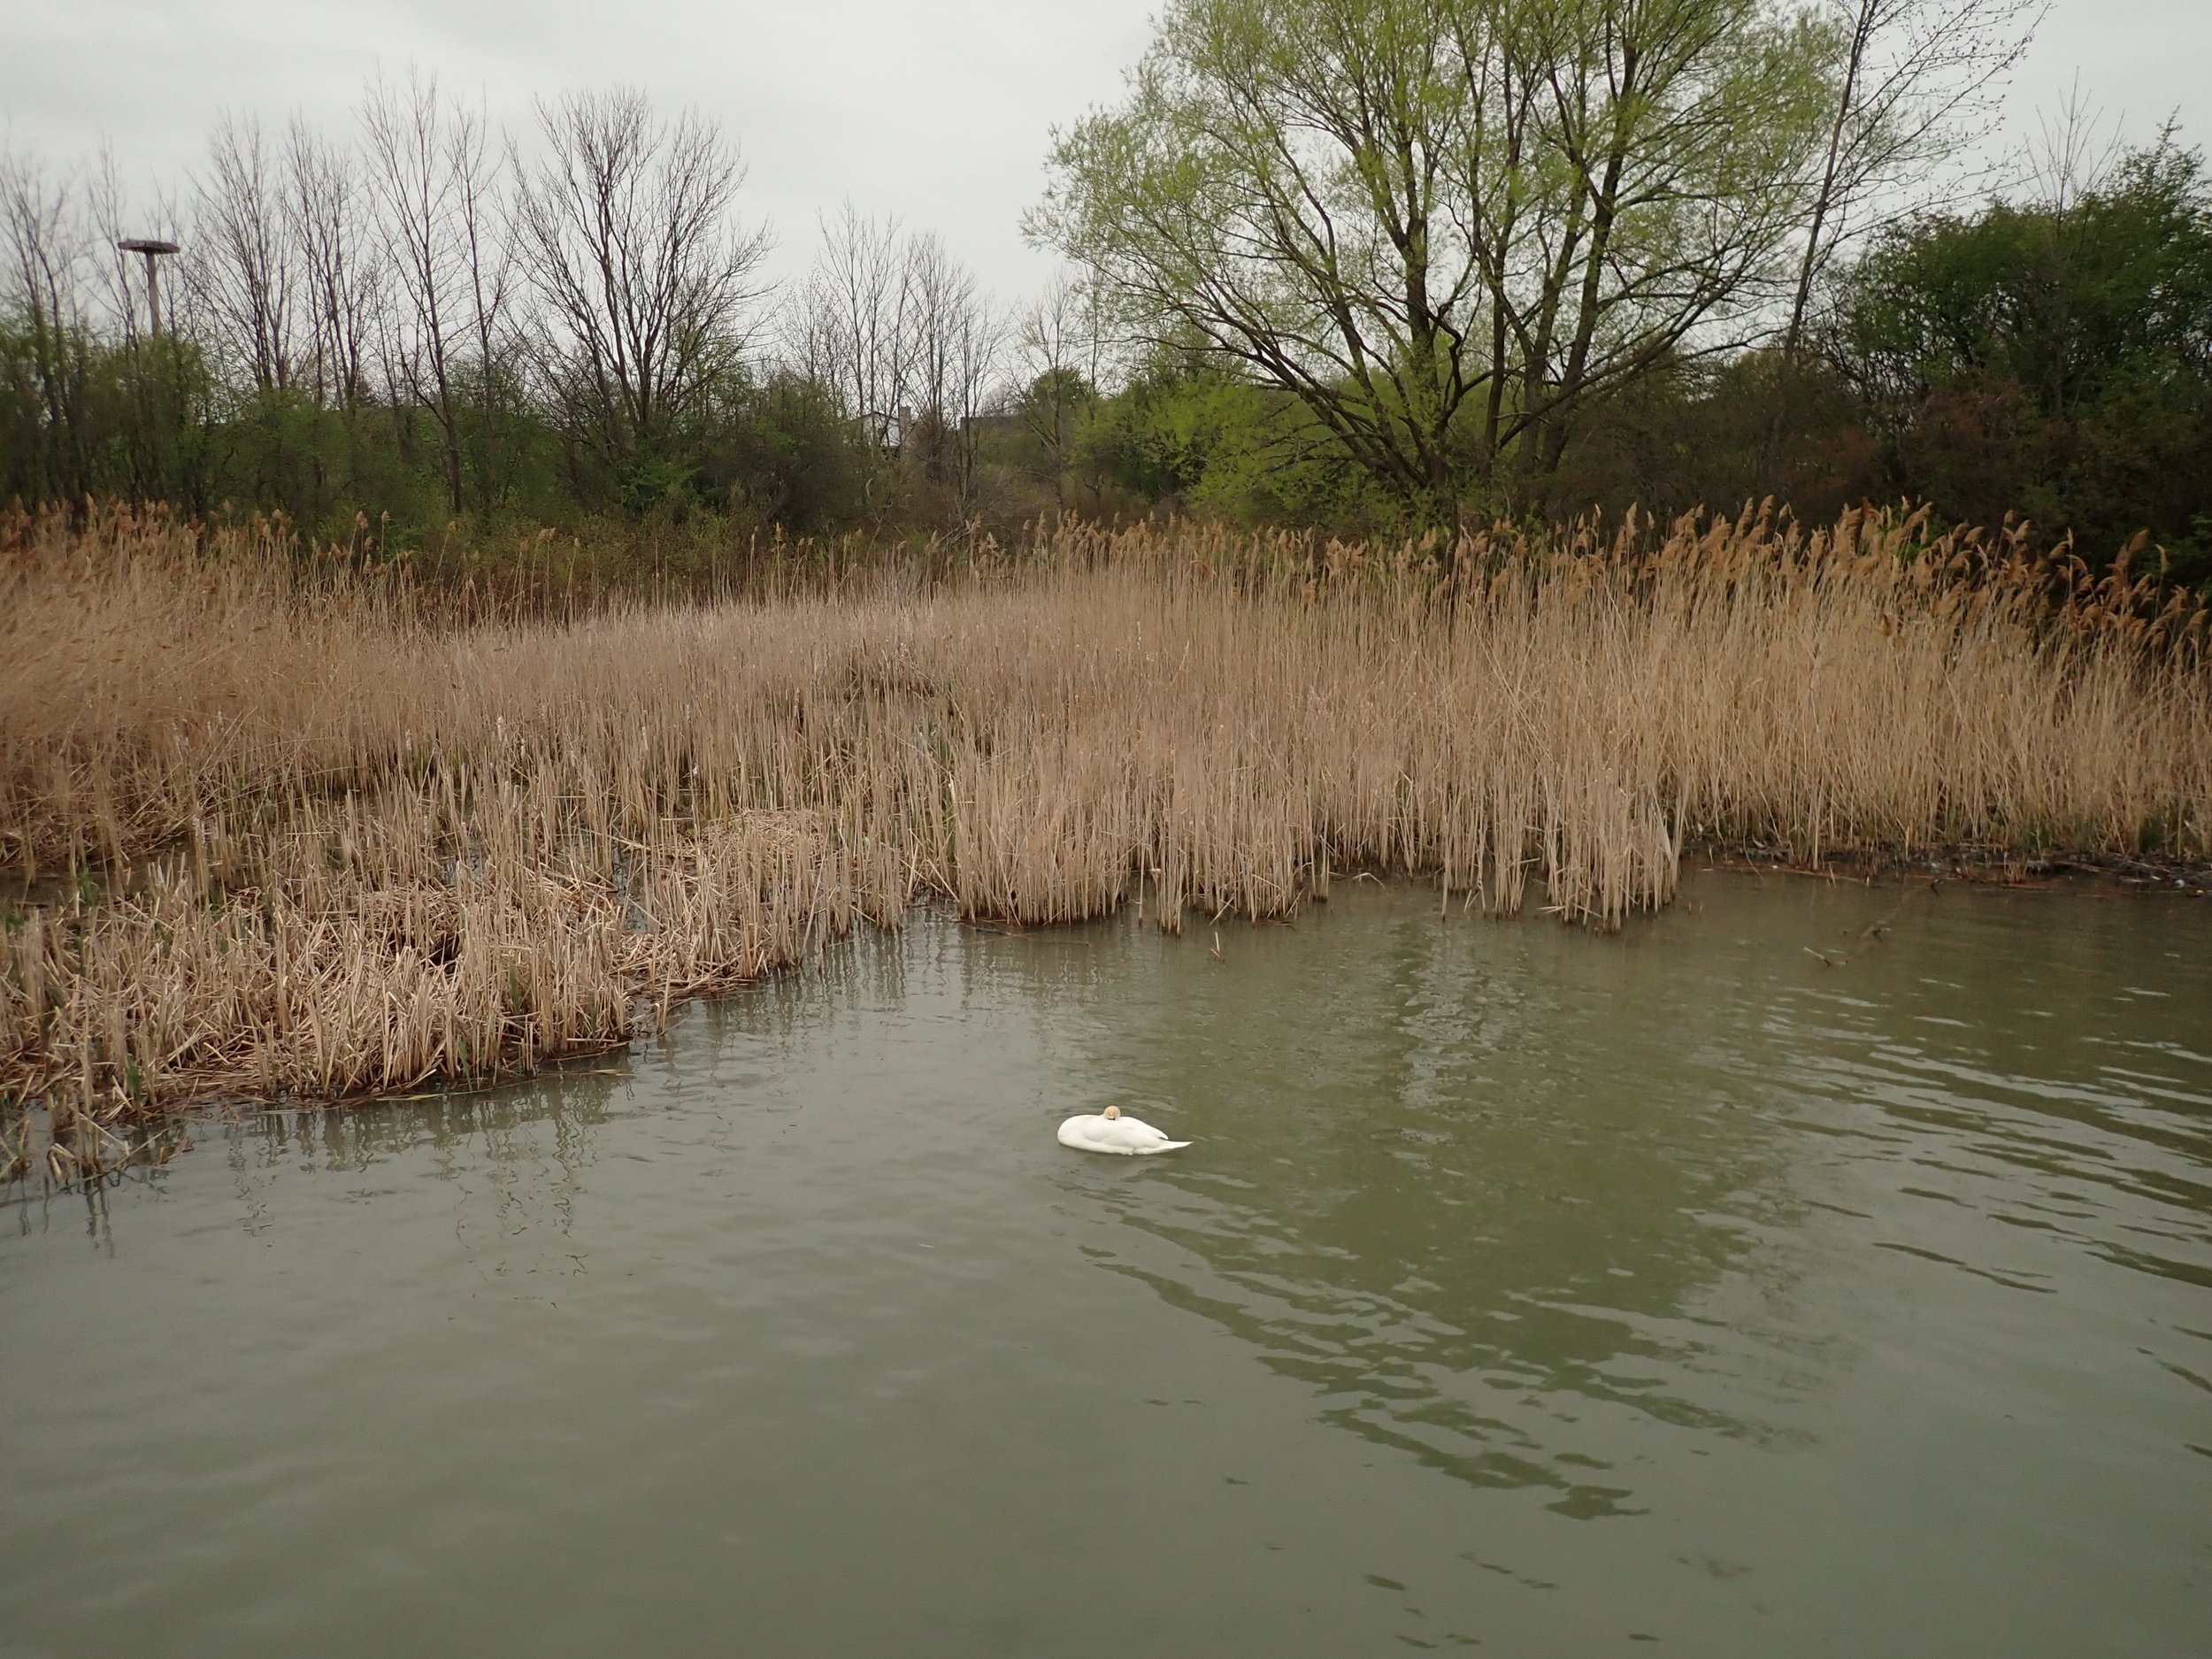  The aggressive European Reed taking over the riparian zone of a lake’s edge (Photo by Kasia Zgurzynski). 